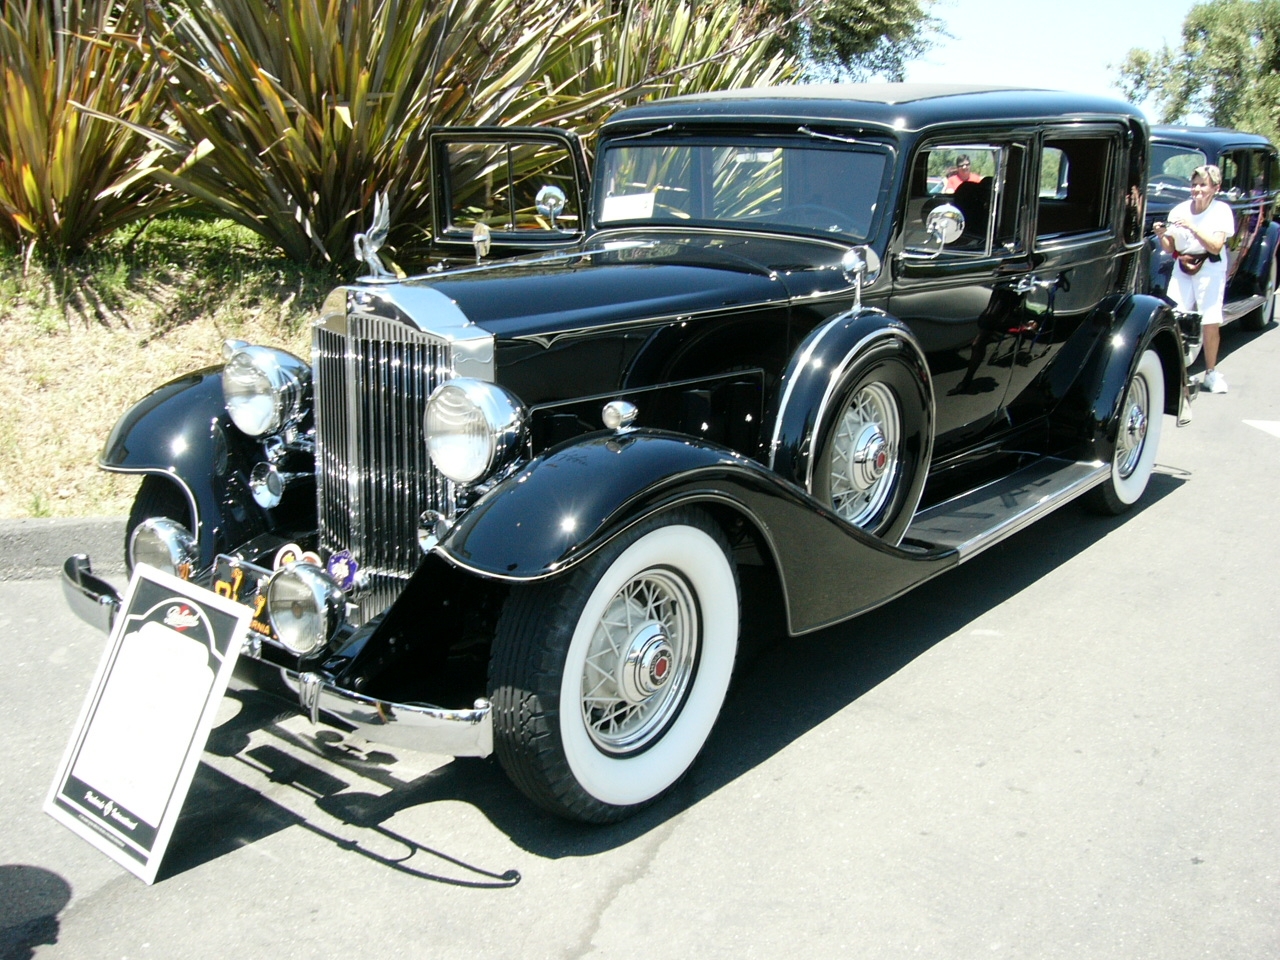 1933 Packard Club Sedan by *RoadTripDog on deviantART